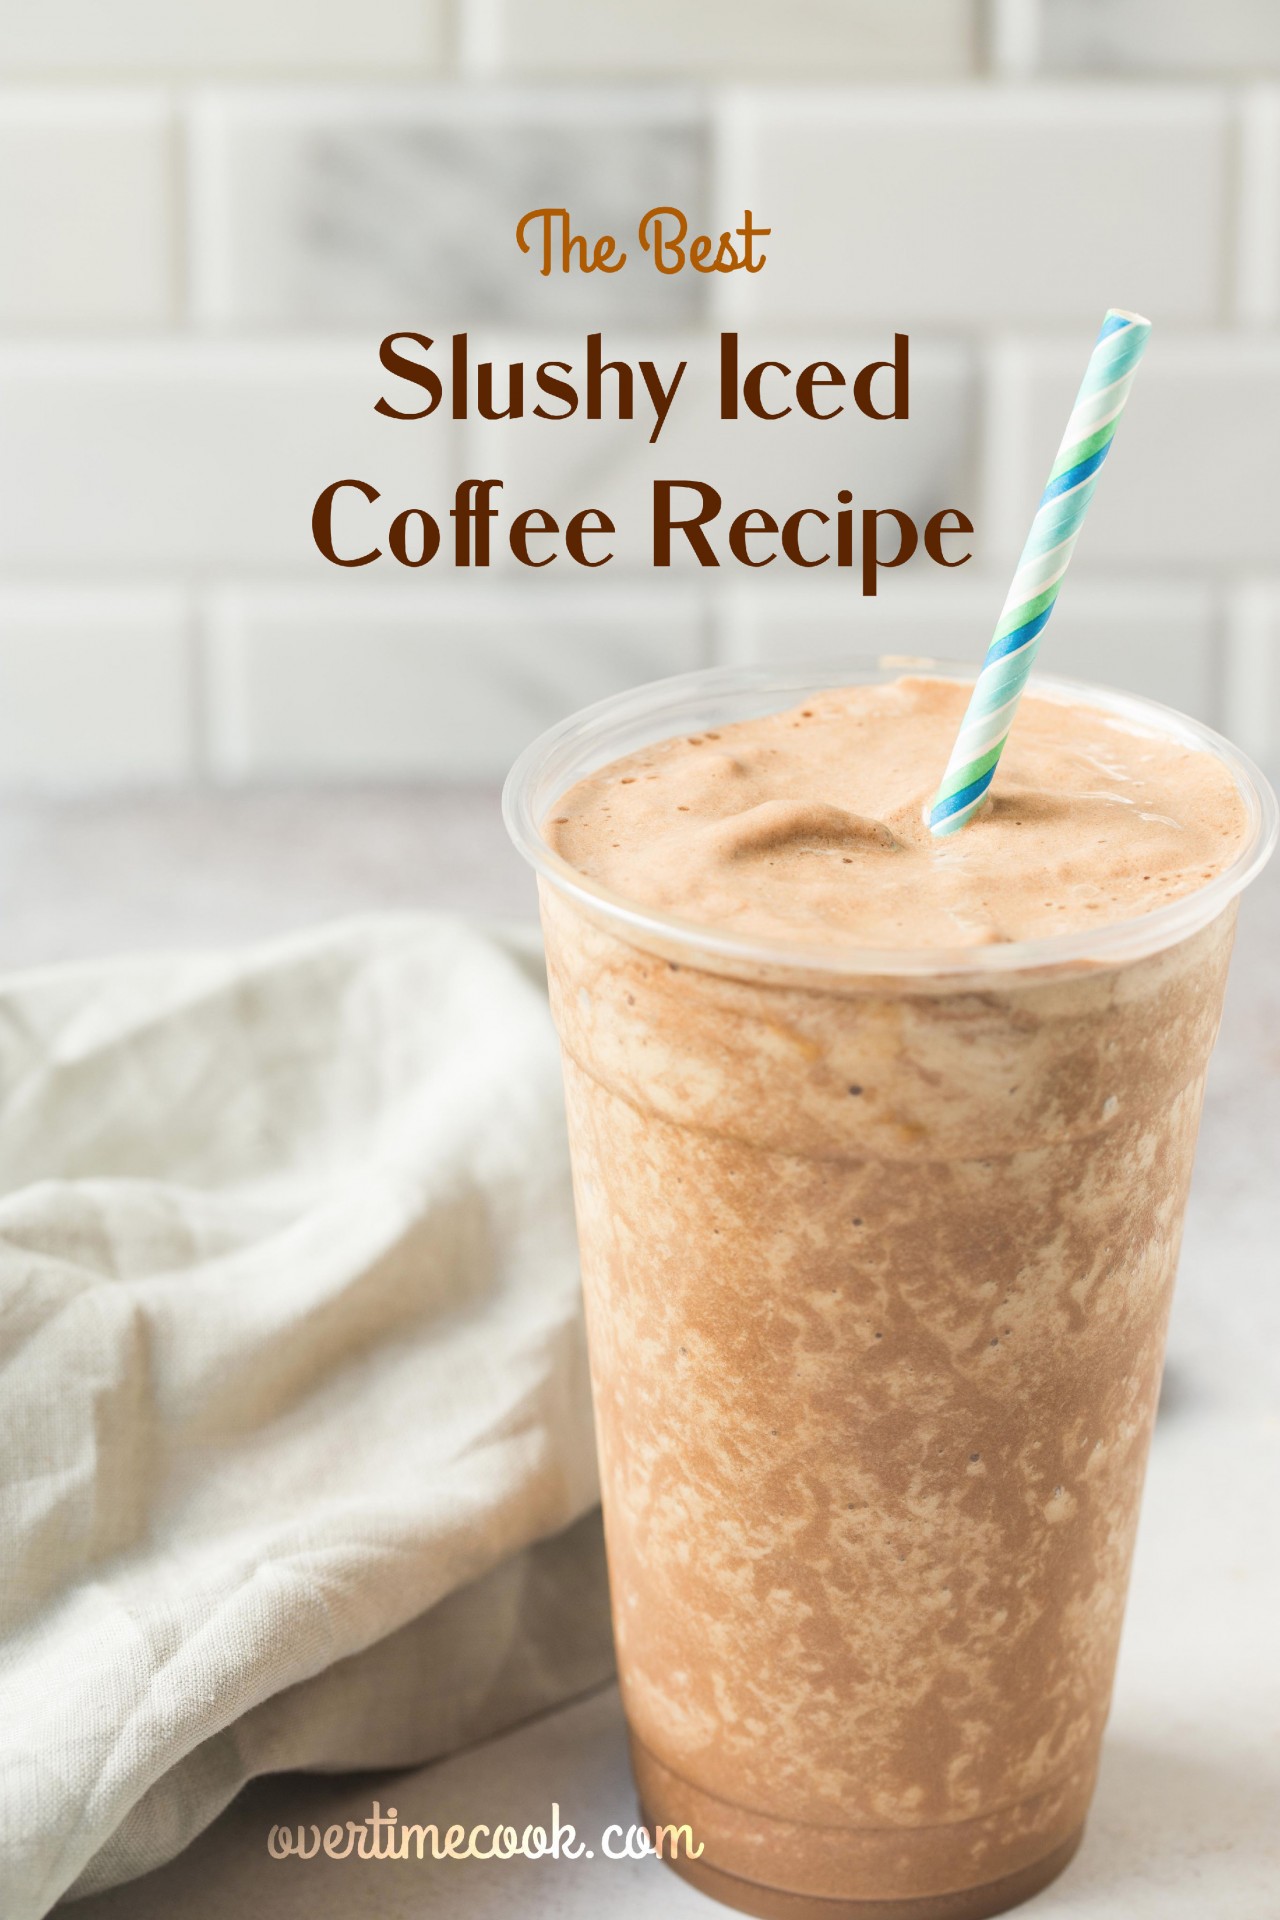 The Best Slushy Iced Coffee Recipe - Overtime Cook